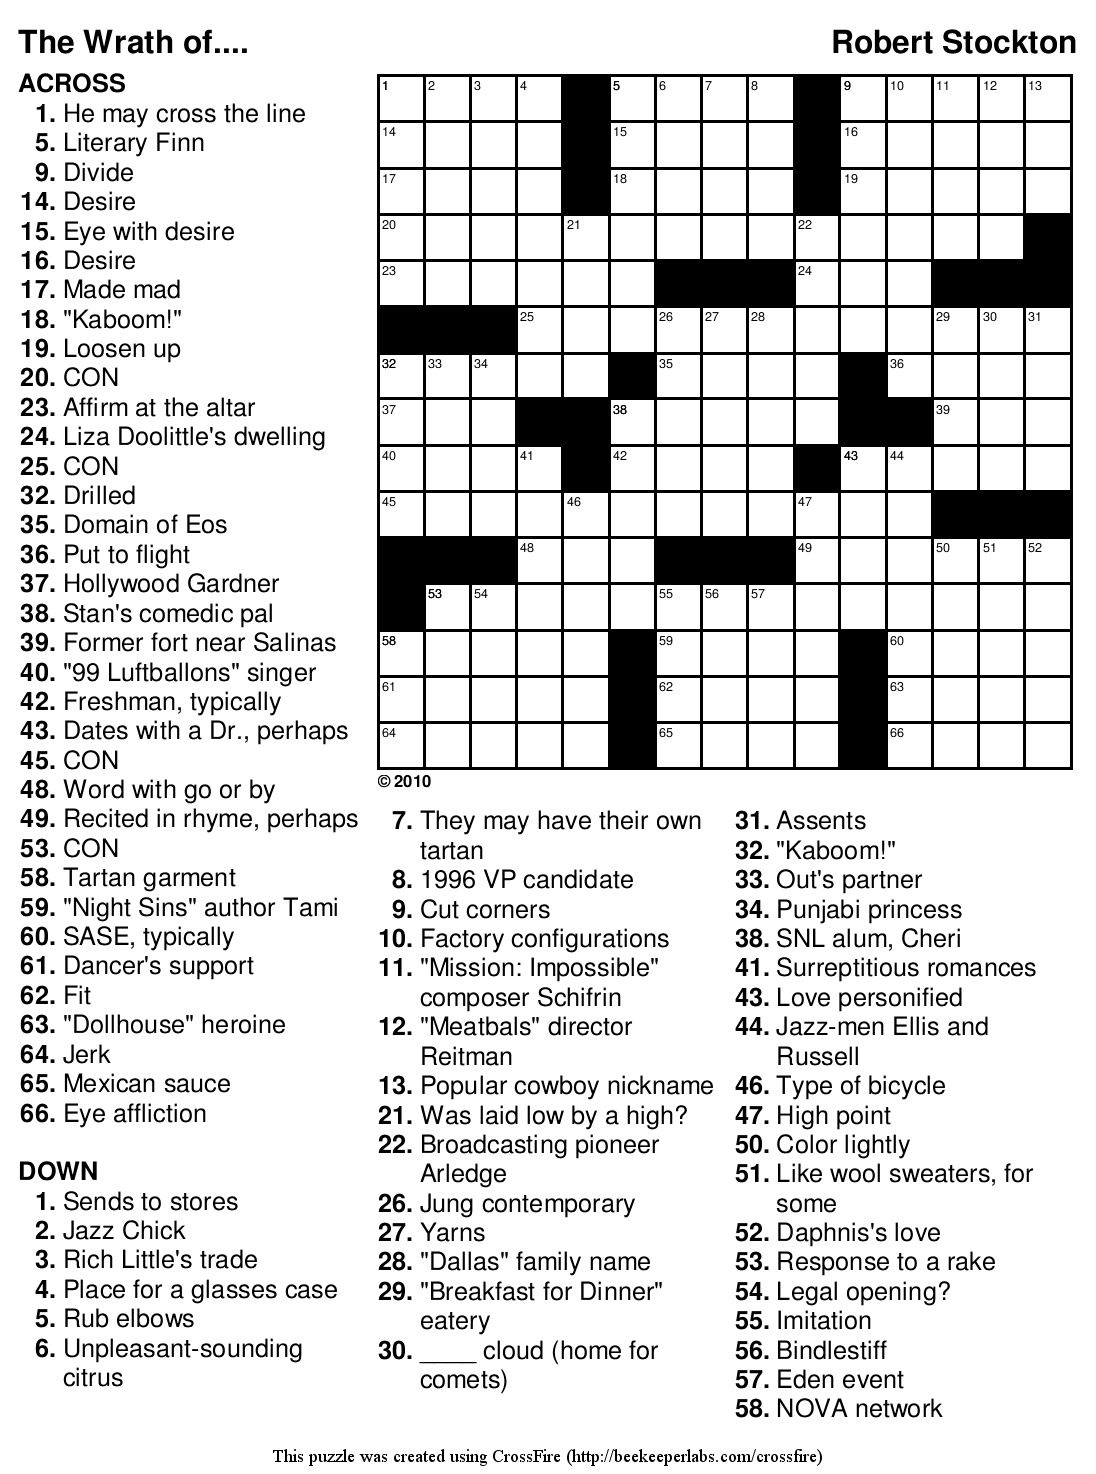 La Times Printable Crossword Puzzle 11 20 16